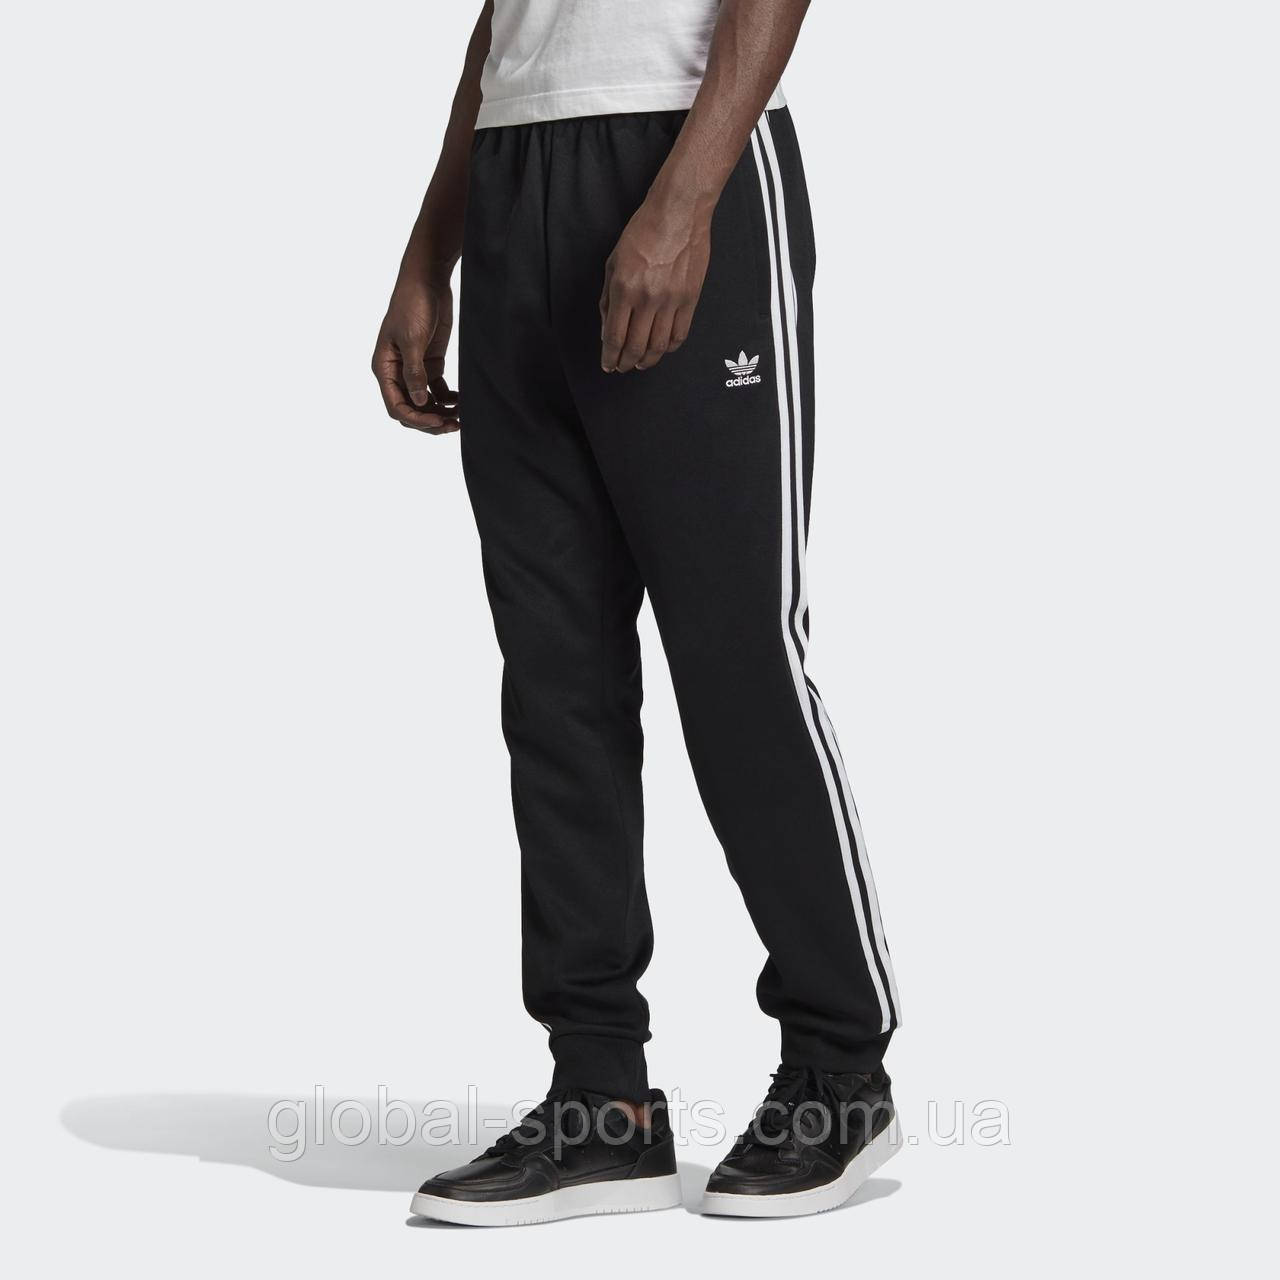 Чоловічі штани Adidas Originals Adicolor Primeblue SST (Артикул:GF0210)